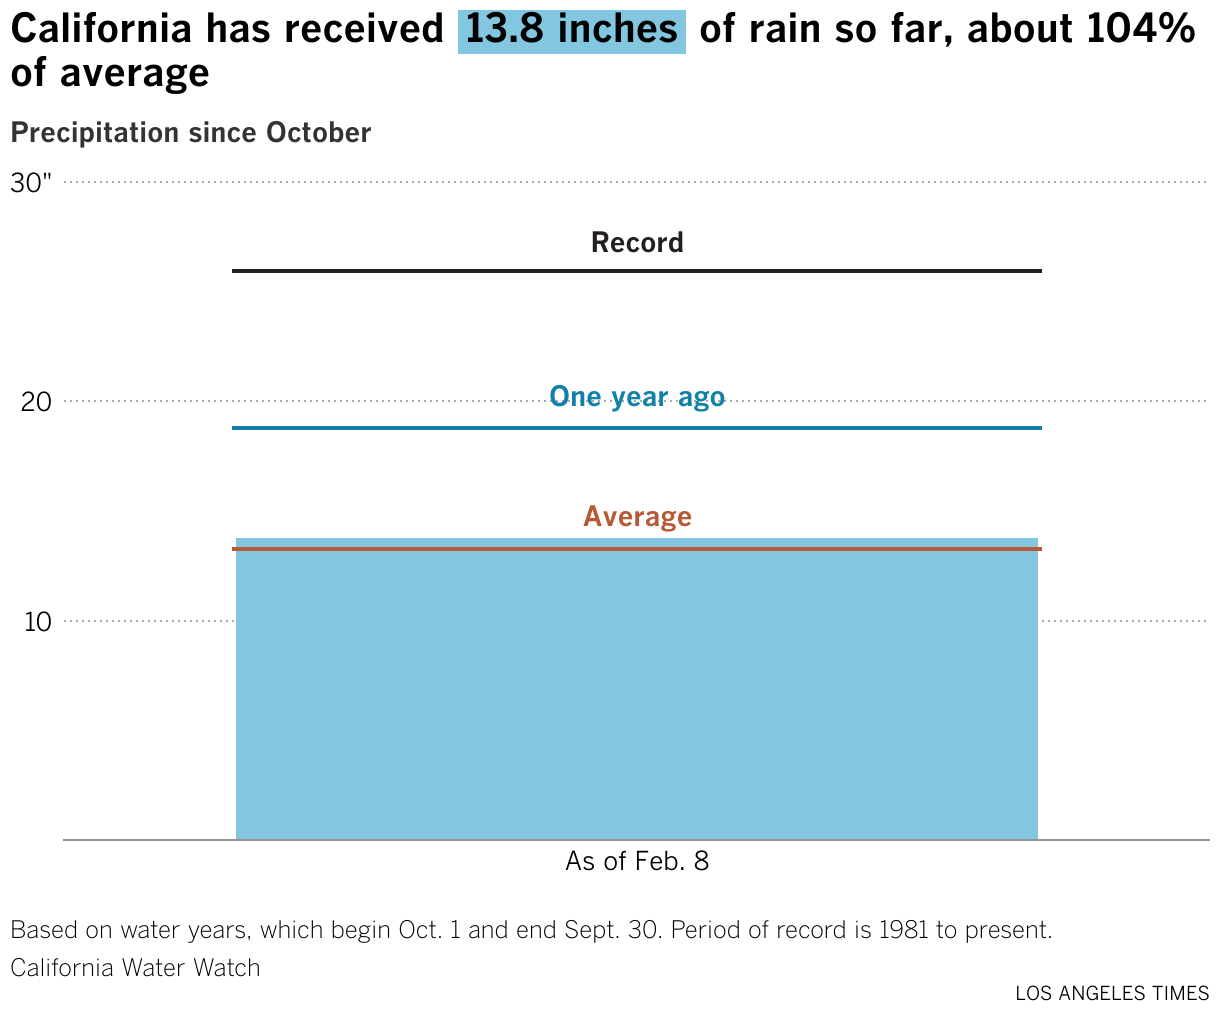 Chart compares California precipitation to last year